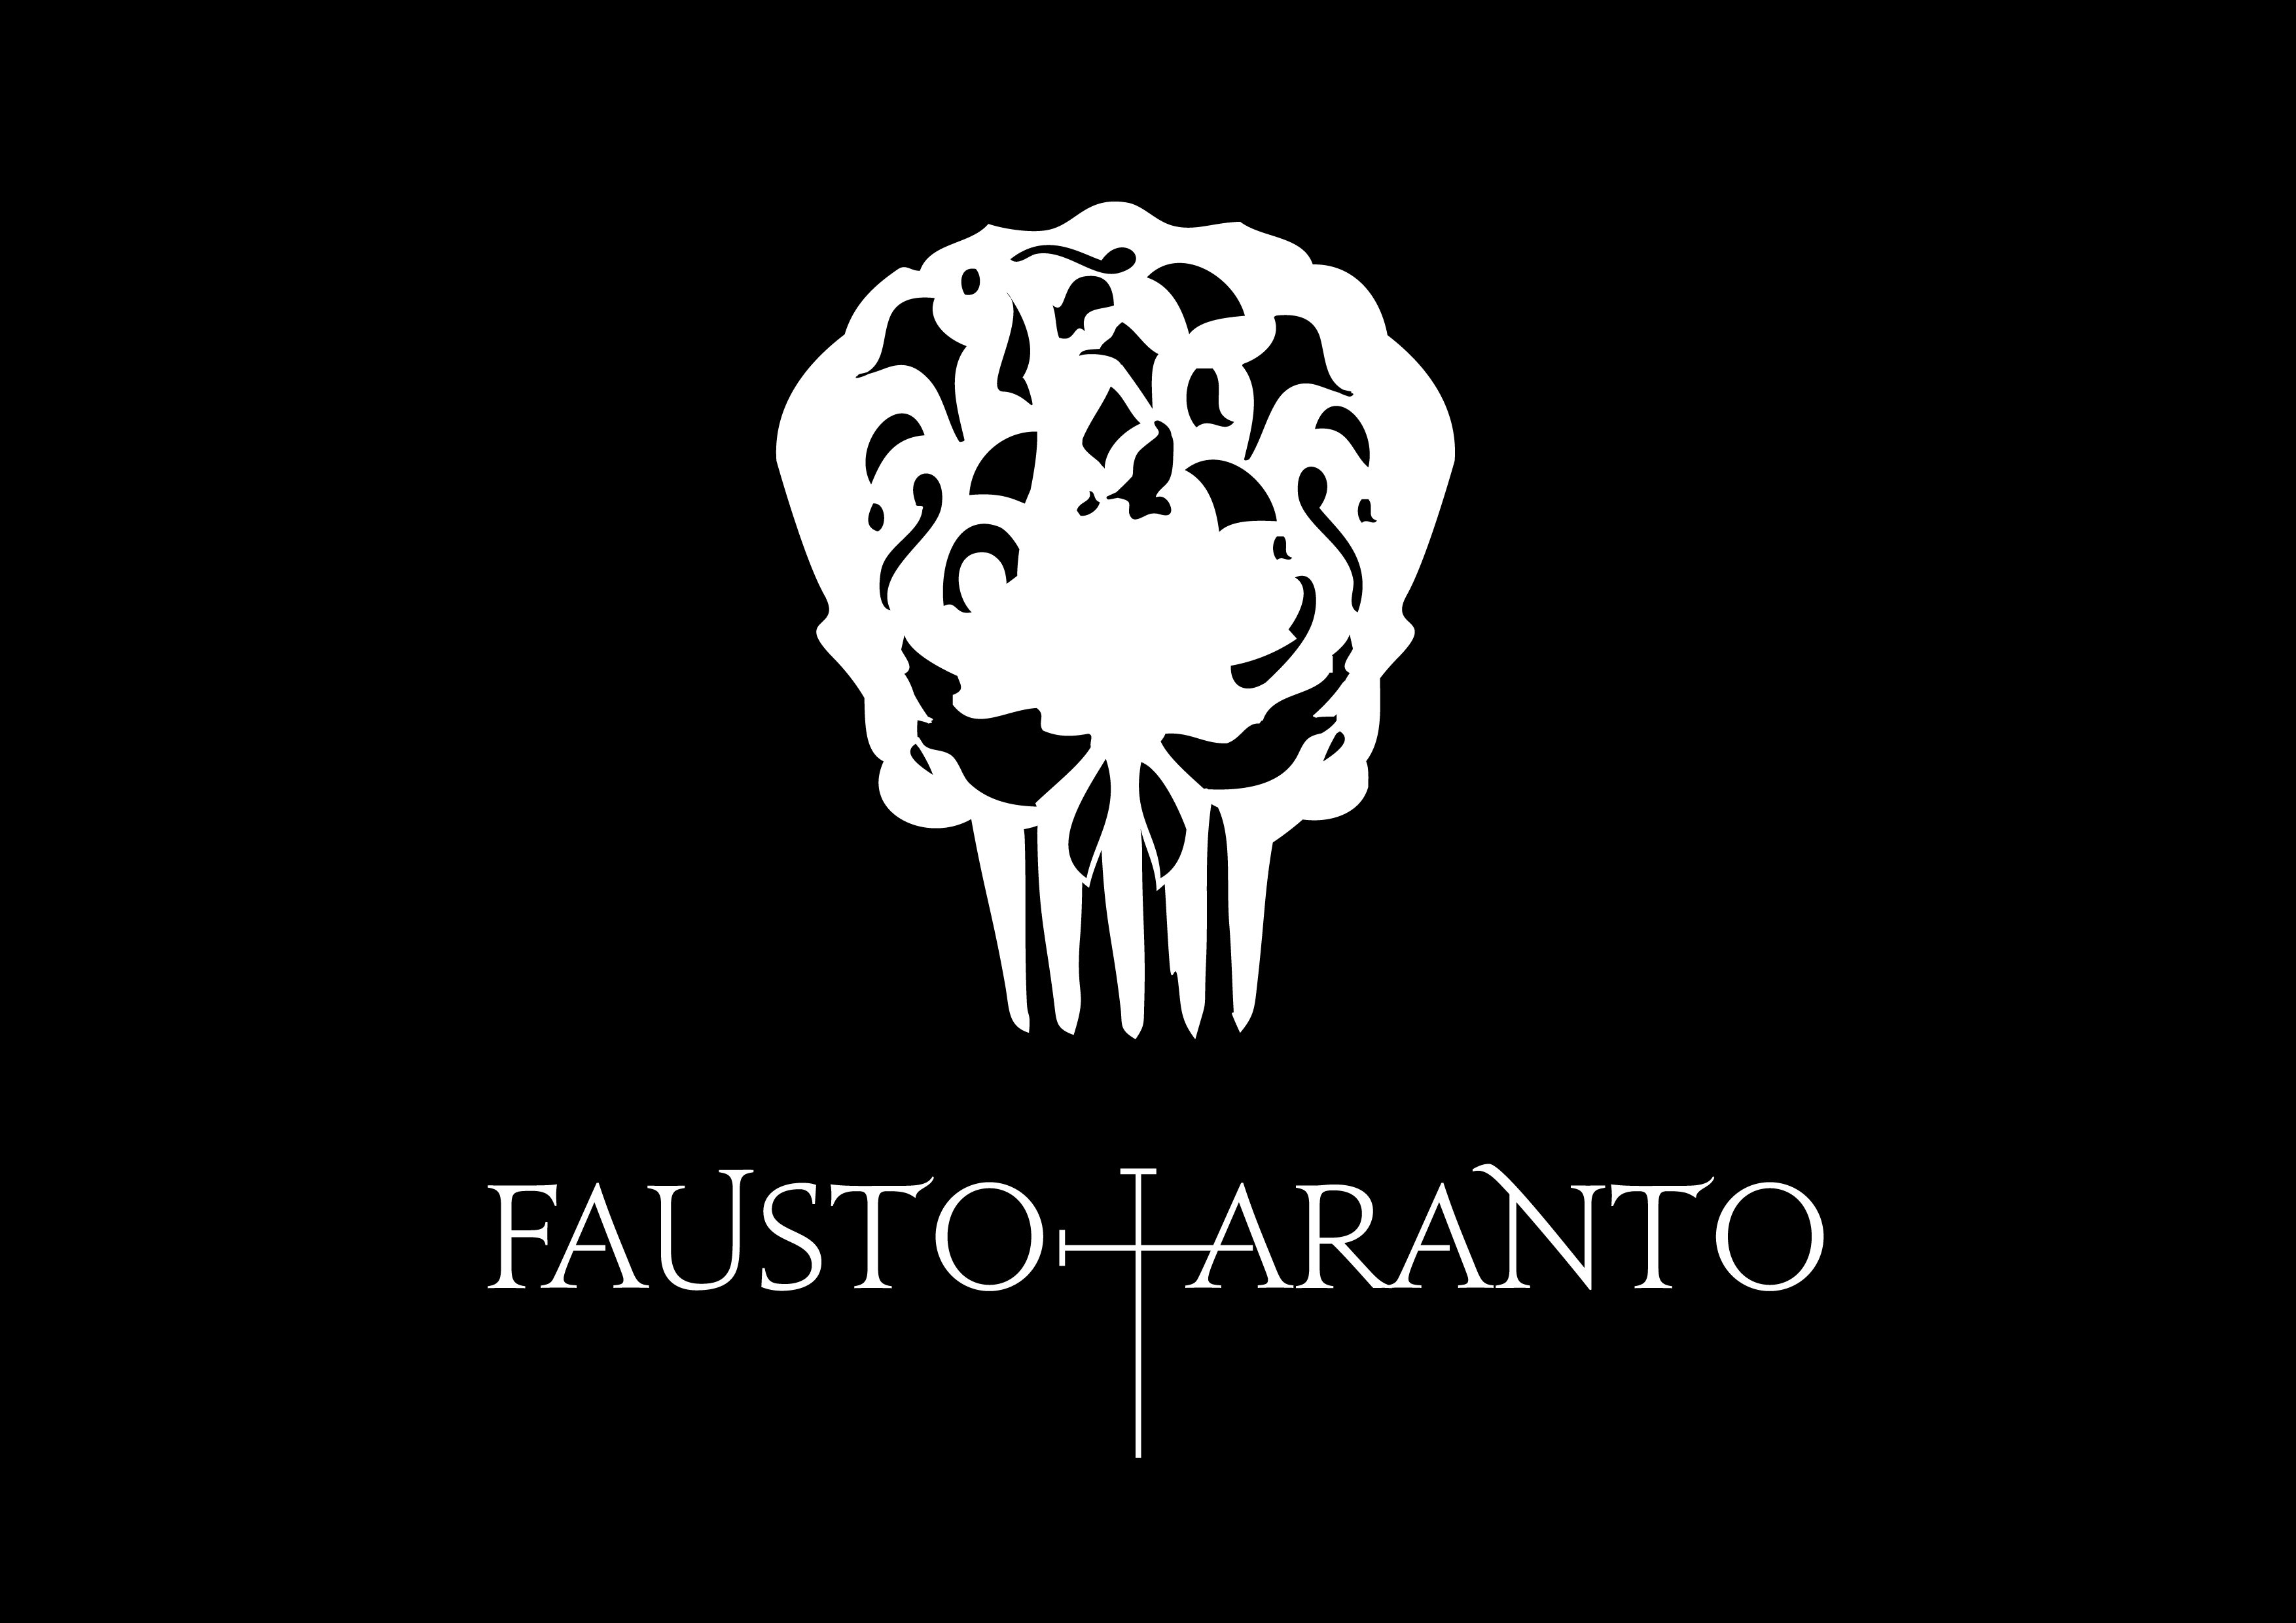 Fausto Taranto logo